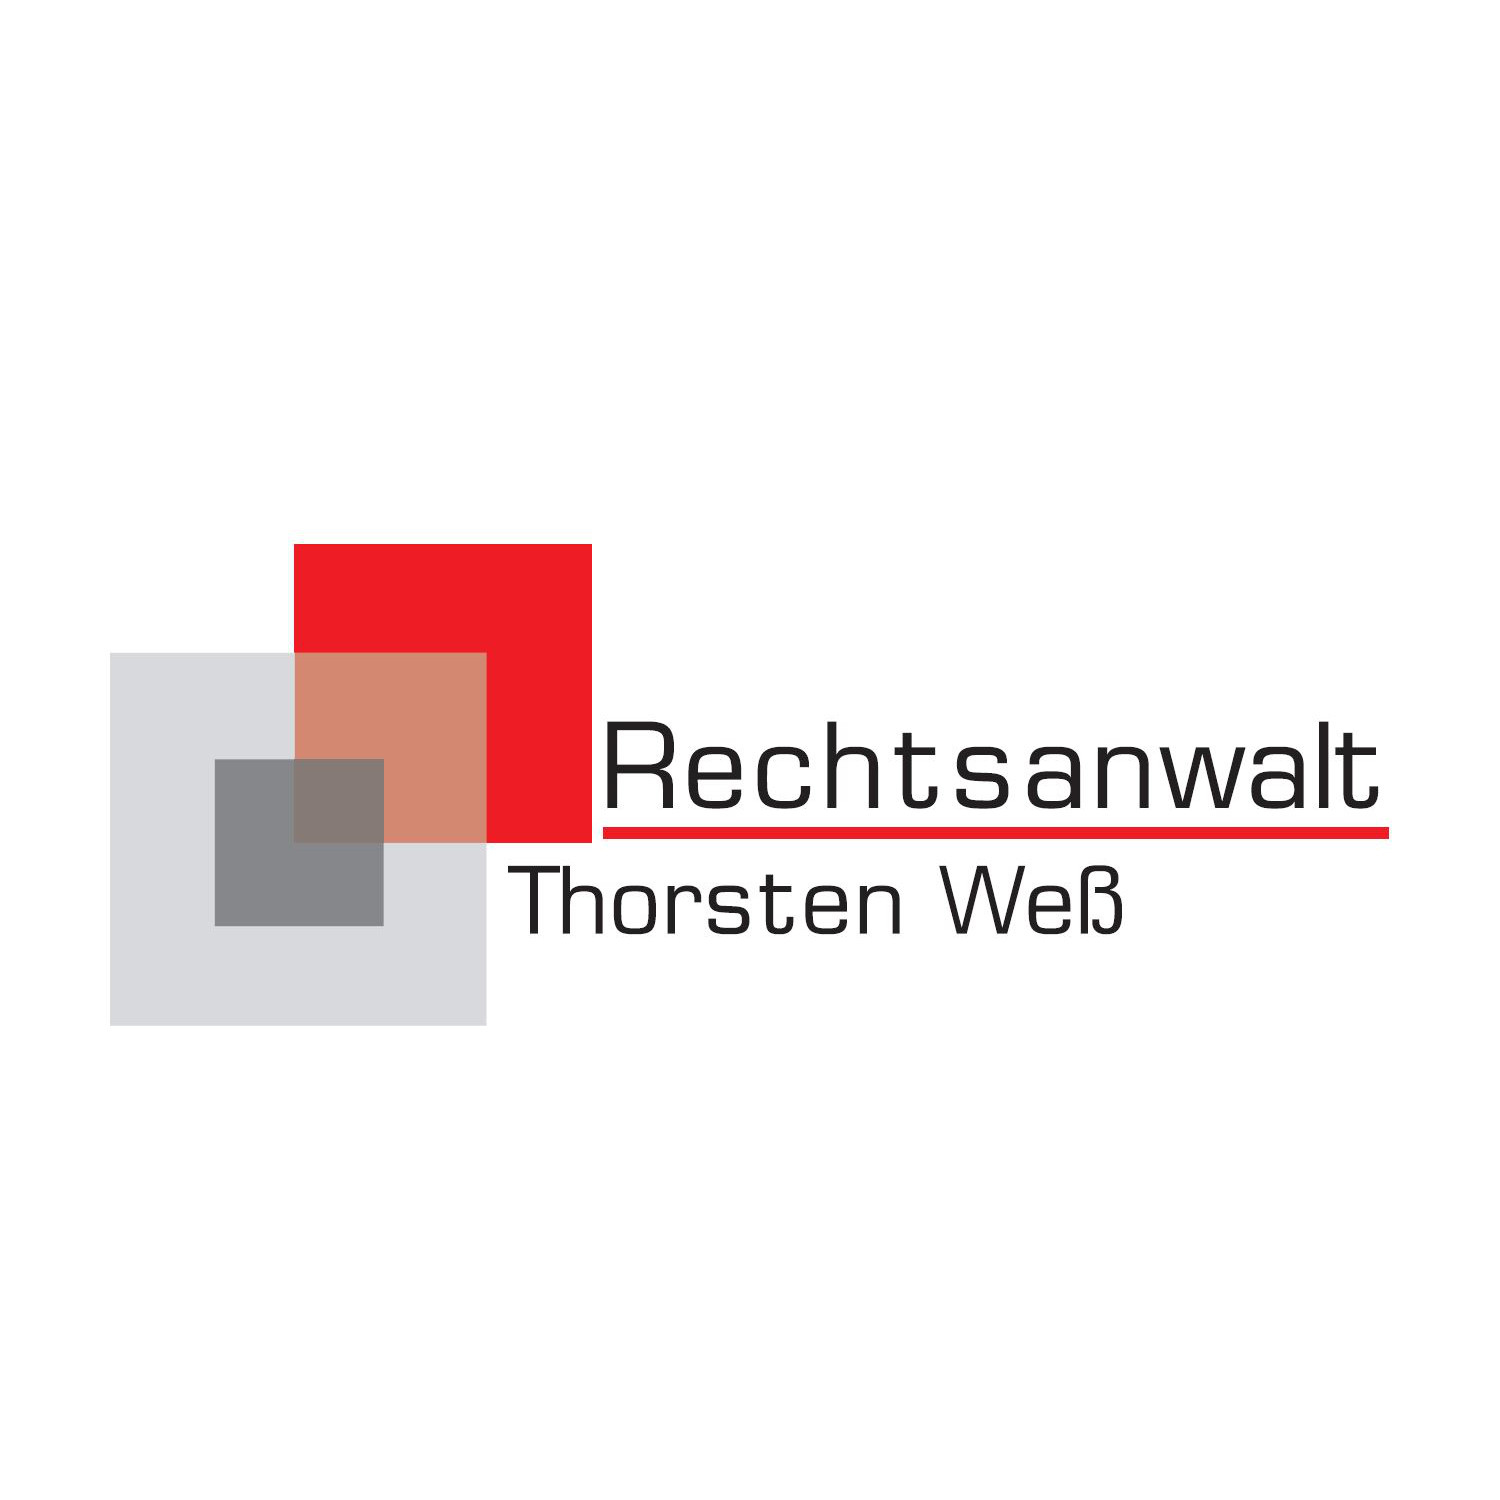 Rechtsanwalt Thorsten Weß in Würzburg - Logo